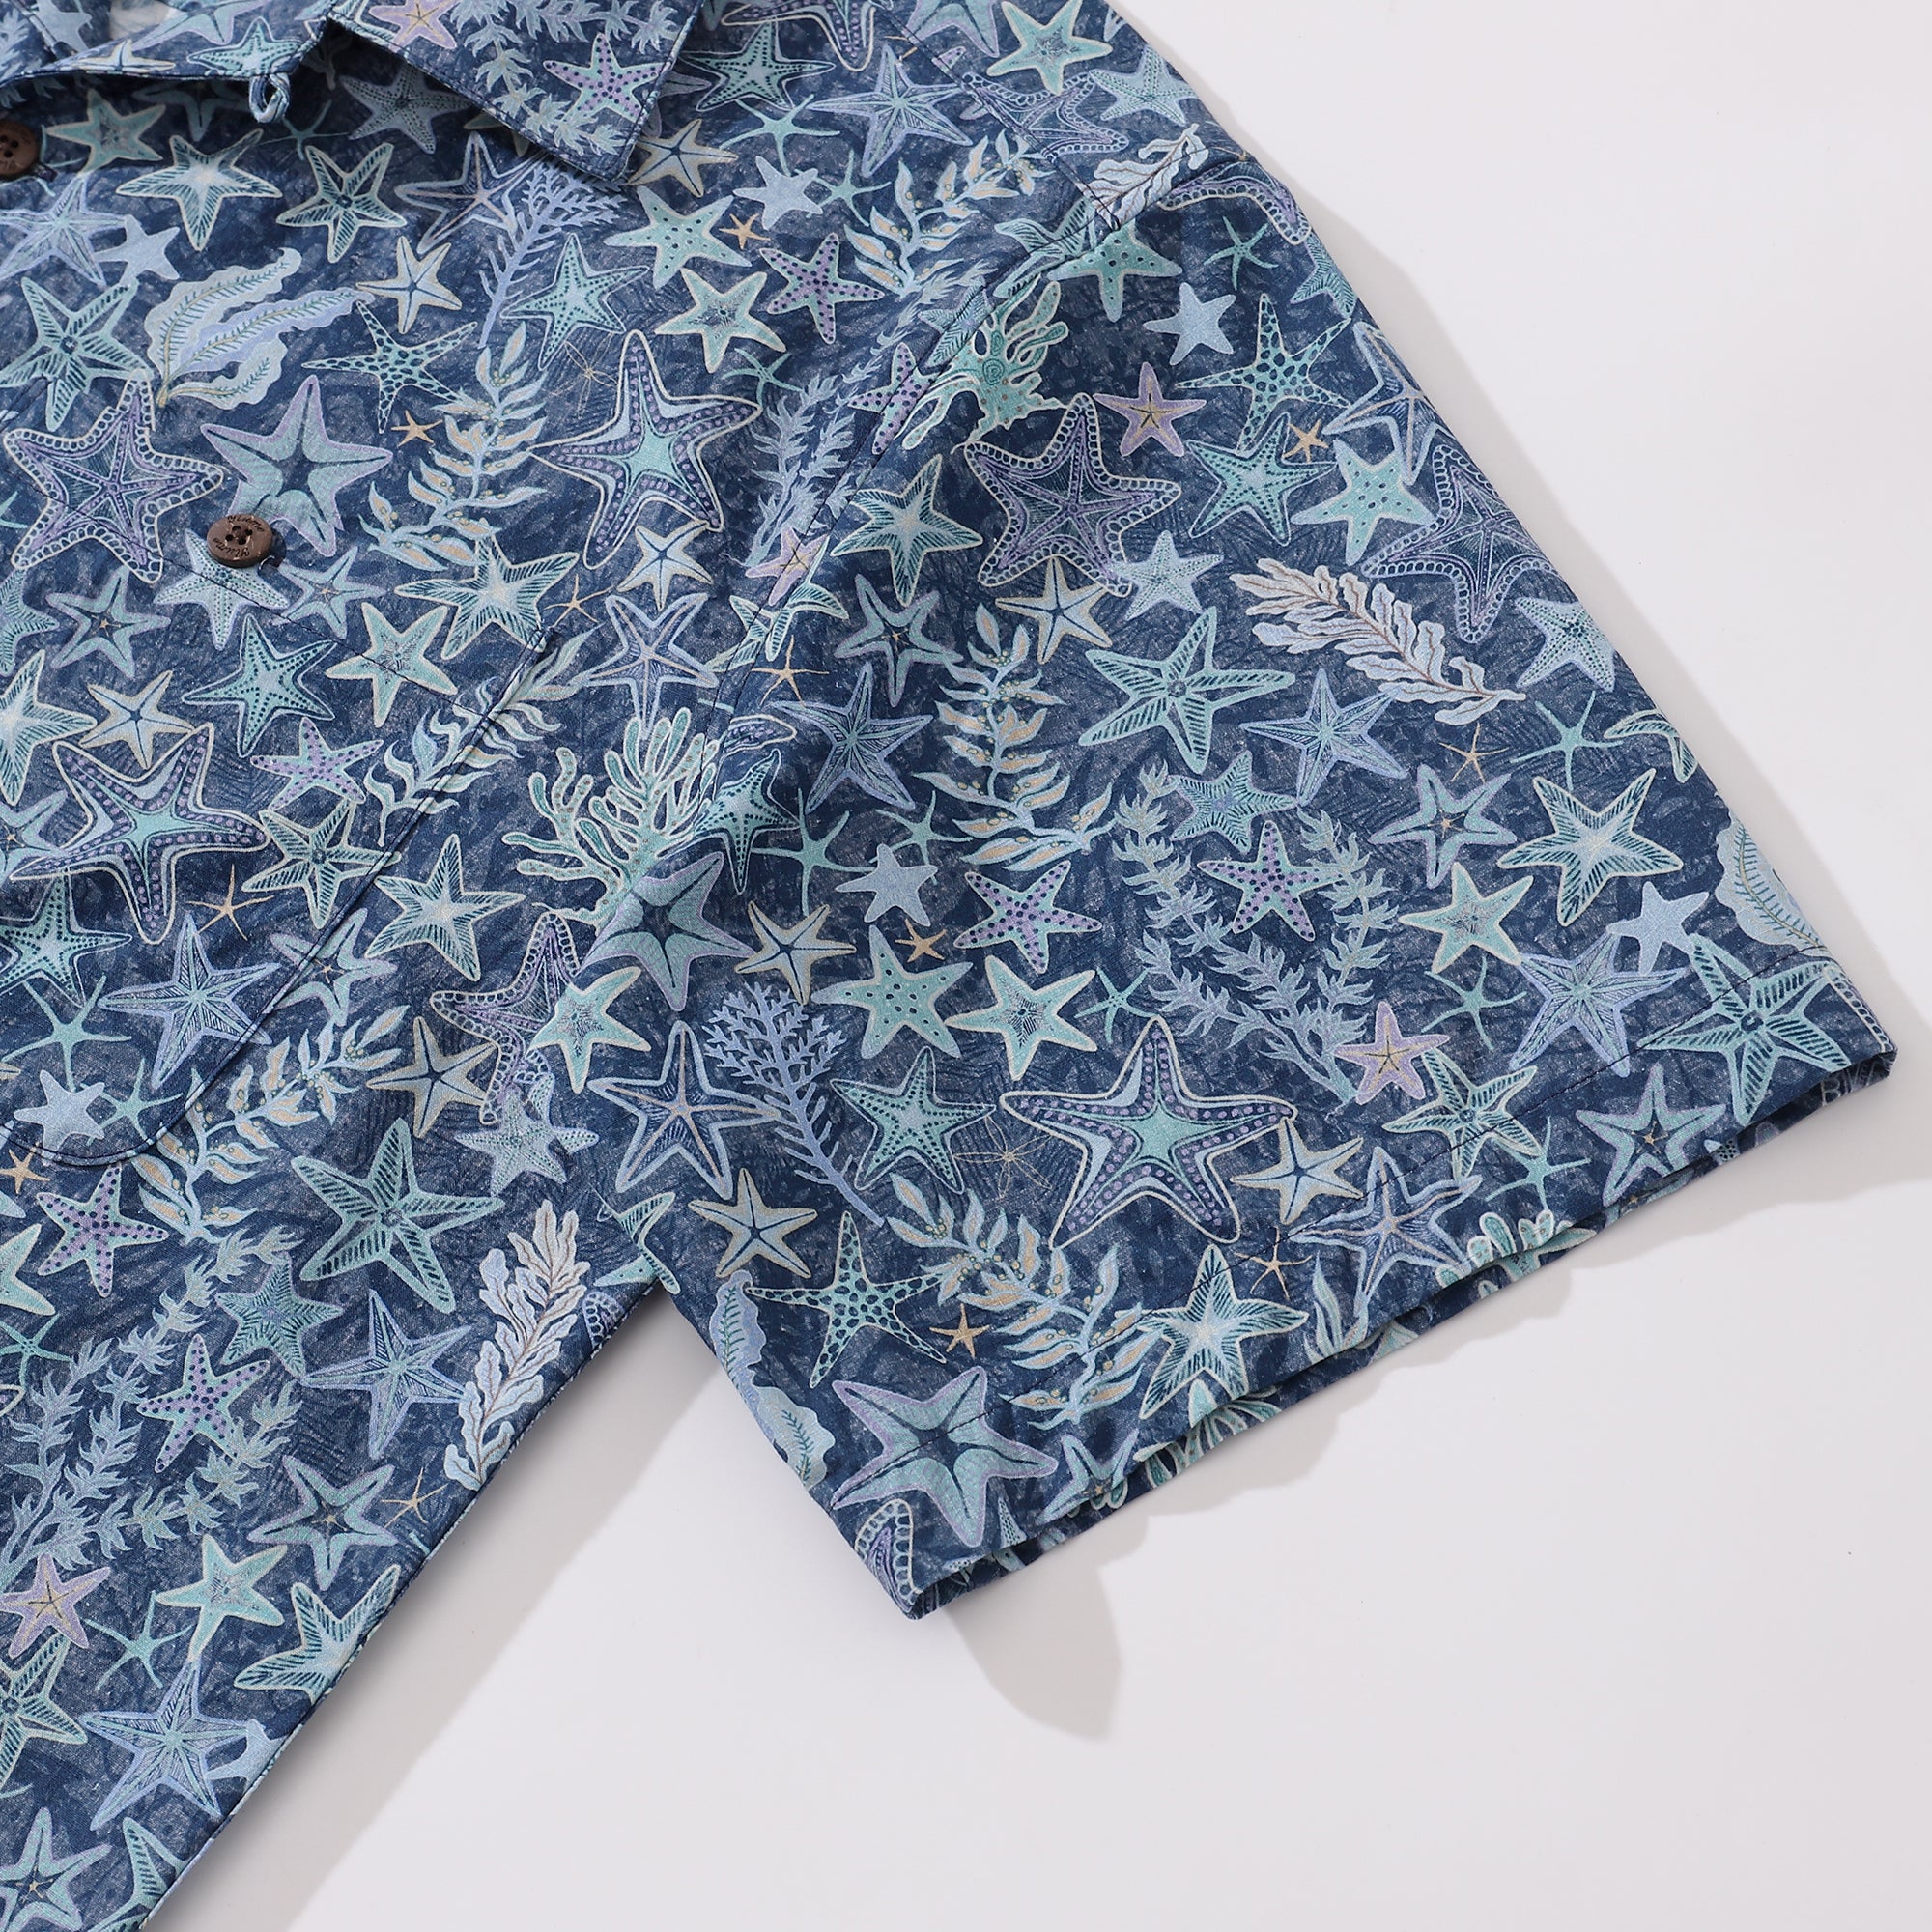 Hawaiian Shirt For Men Sea Stars and Coral Shirt Camp Collar 100% Cotton